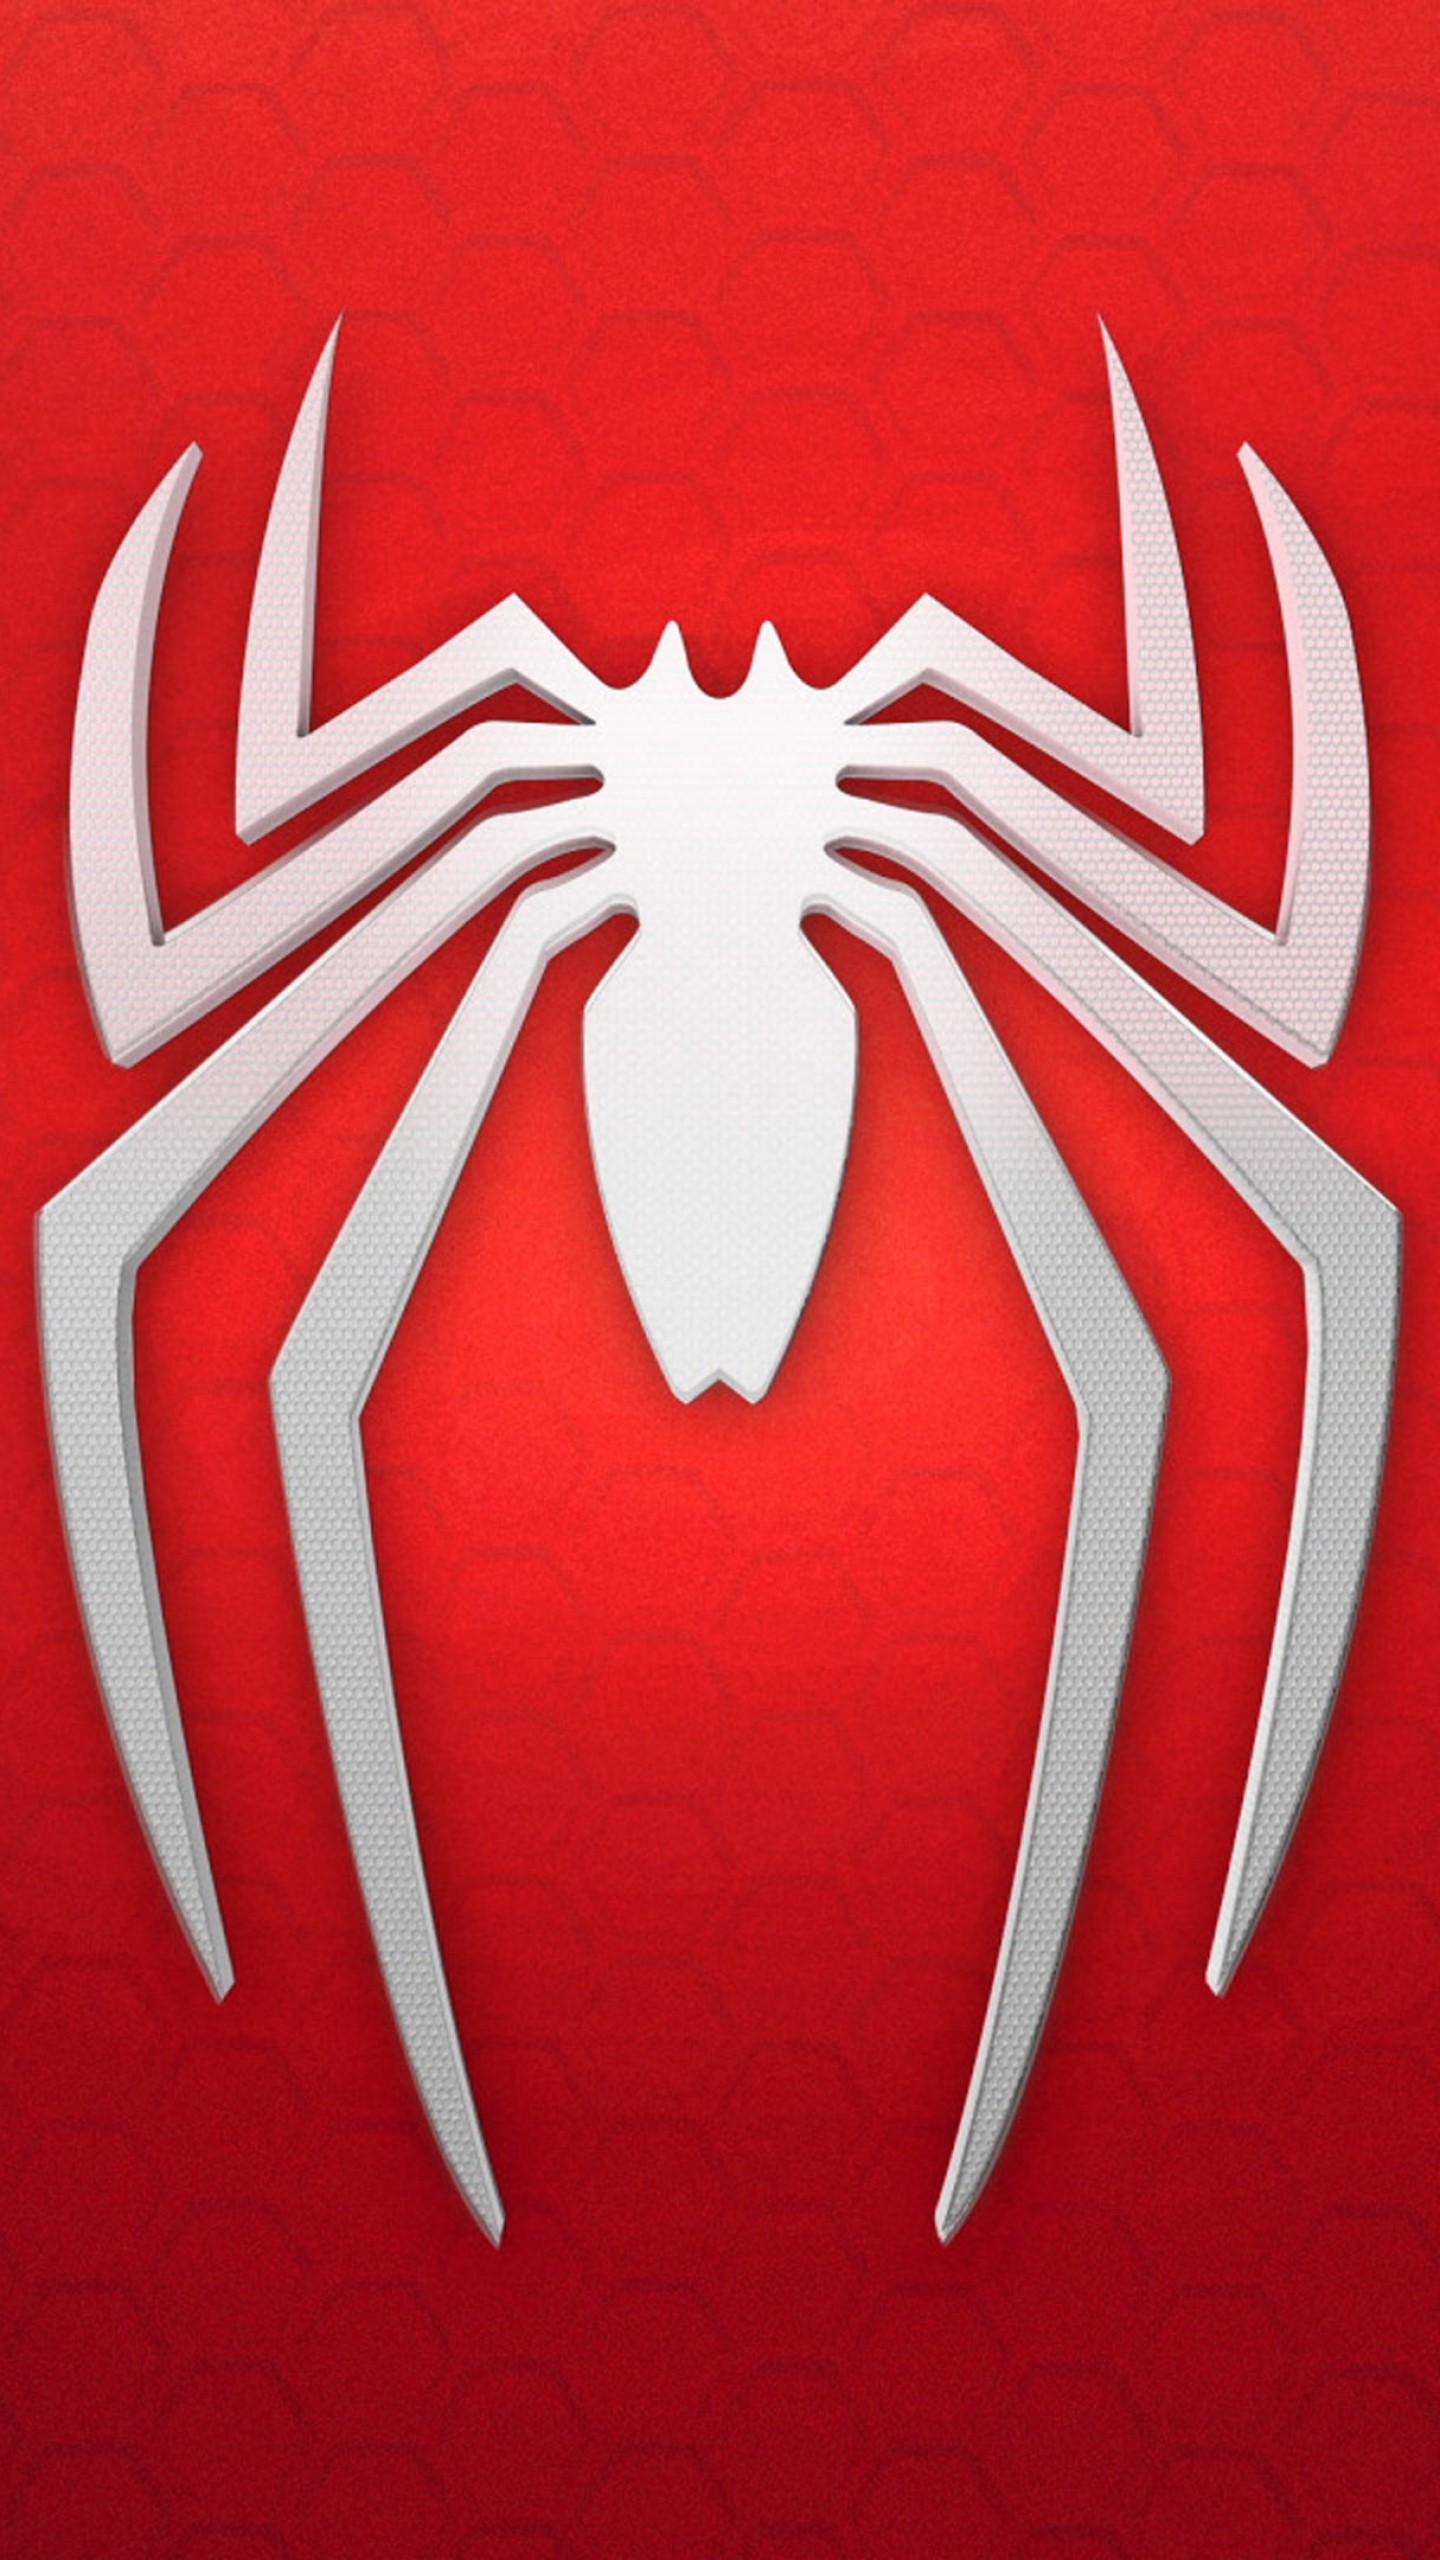 Wallpaper Spiderman Logo Wallpapers